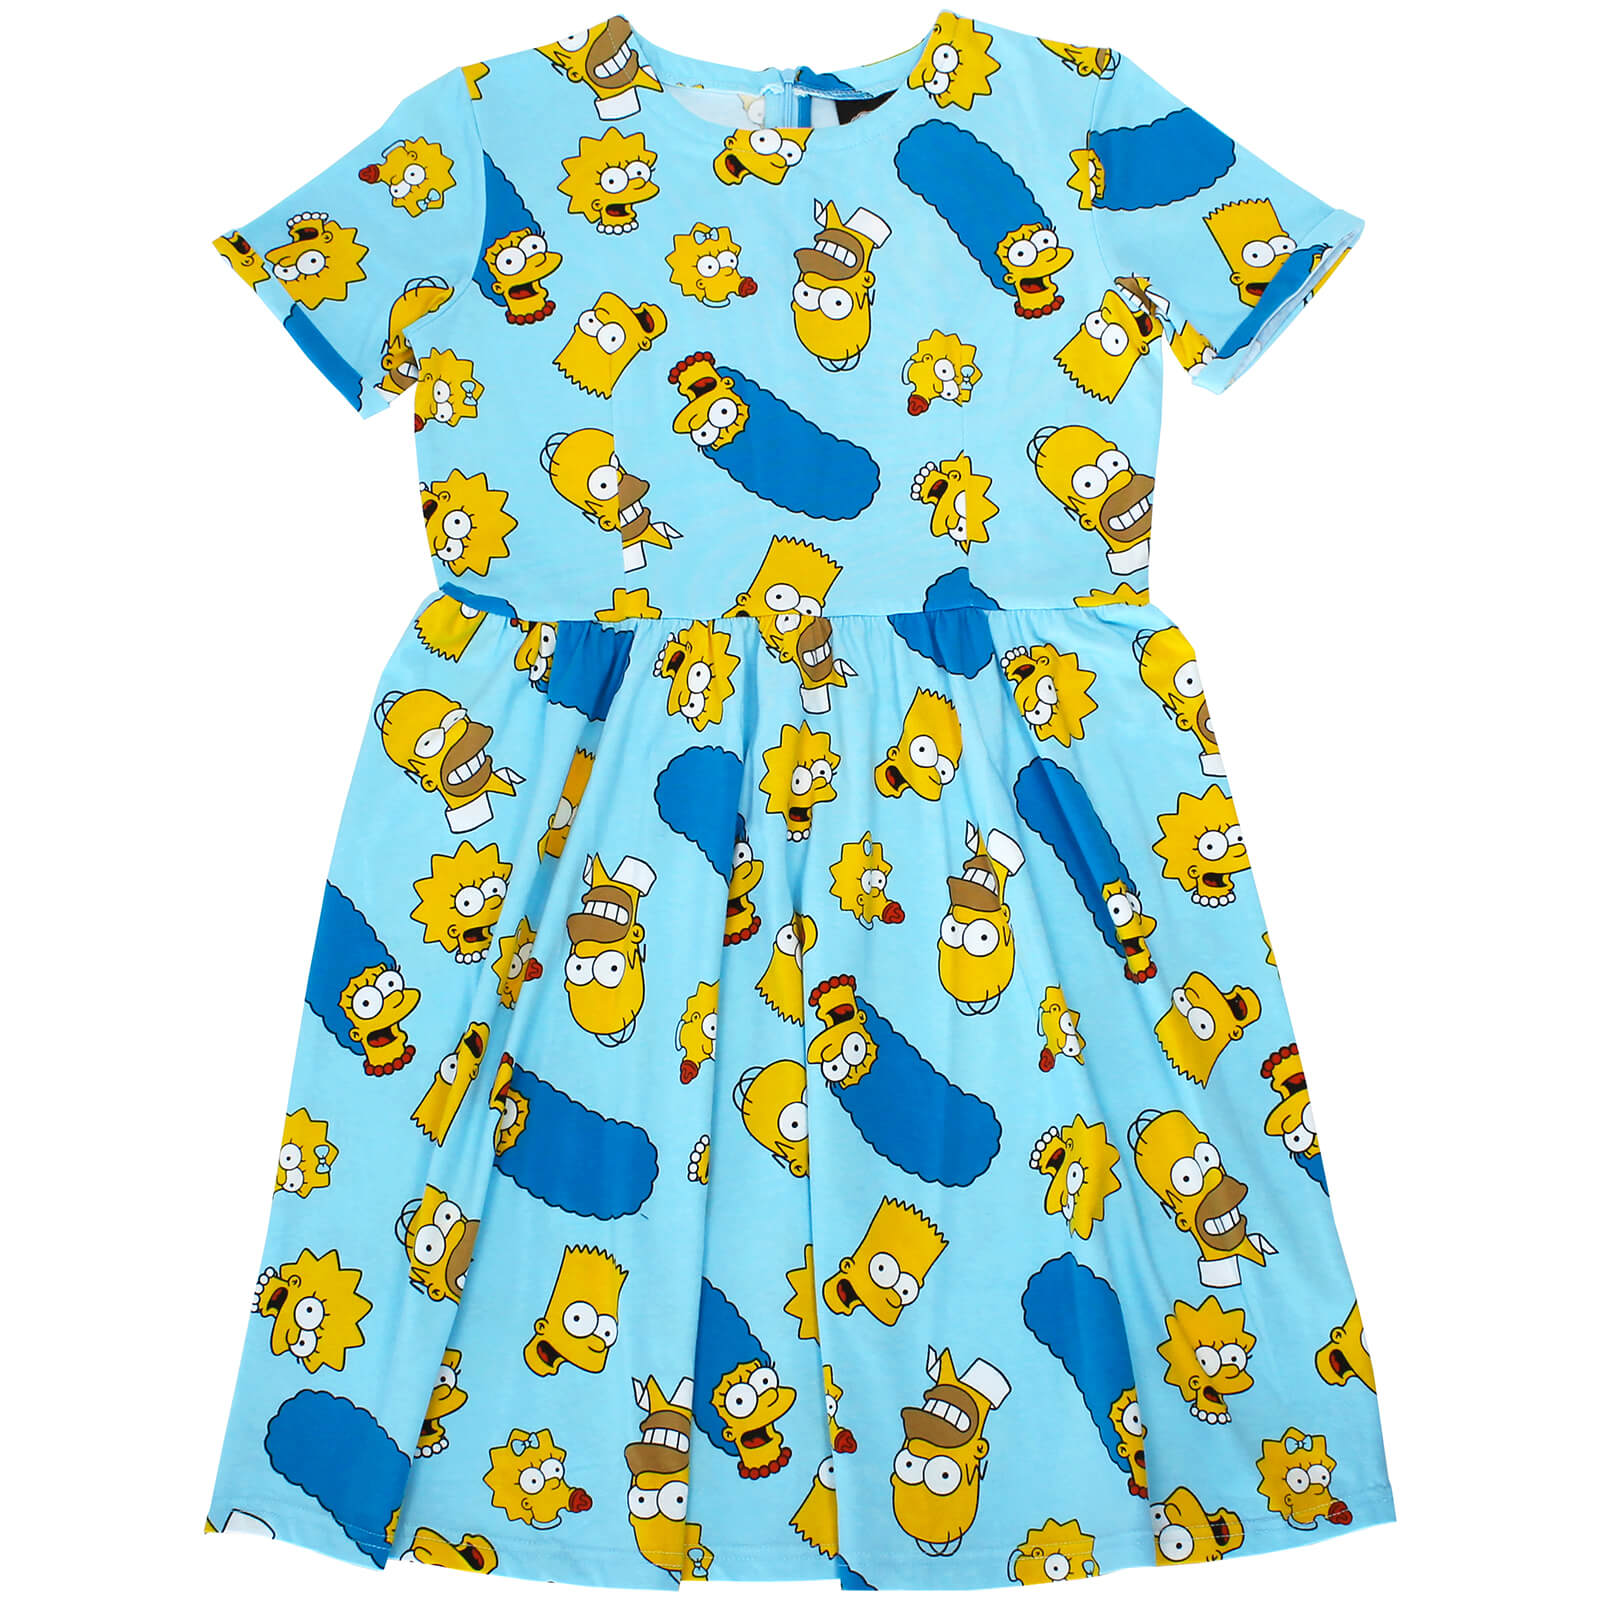 Cakeworthy x The Simpsons - Simpsons Family Toss Print Dress - M